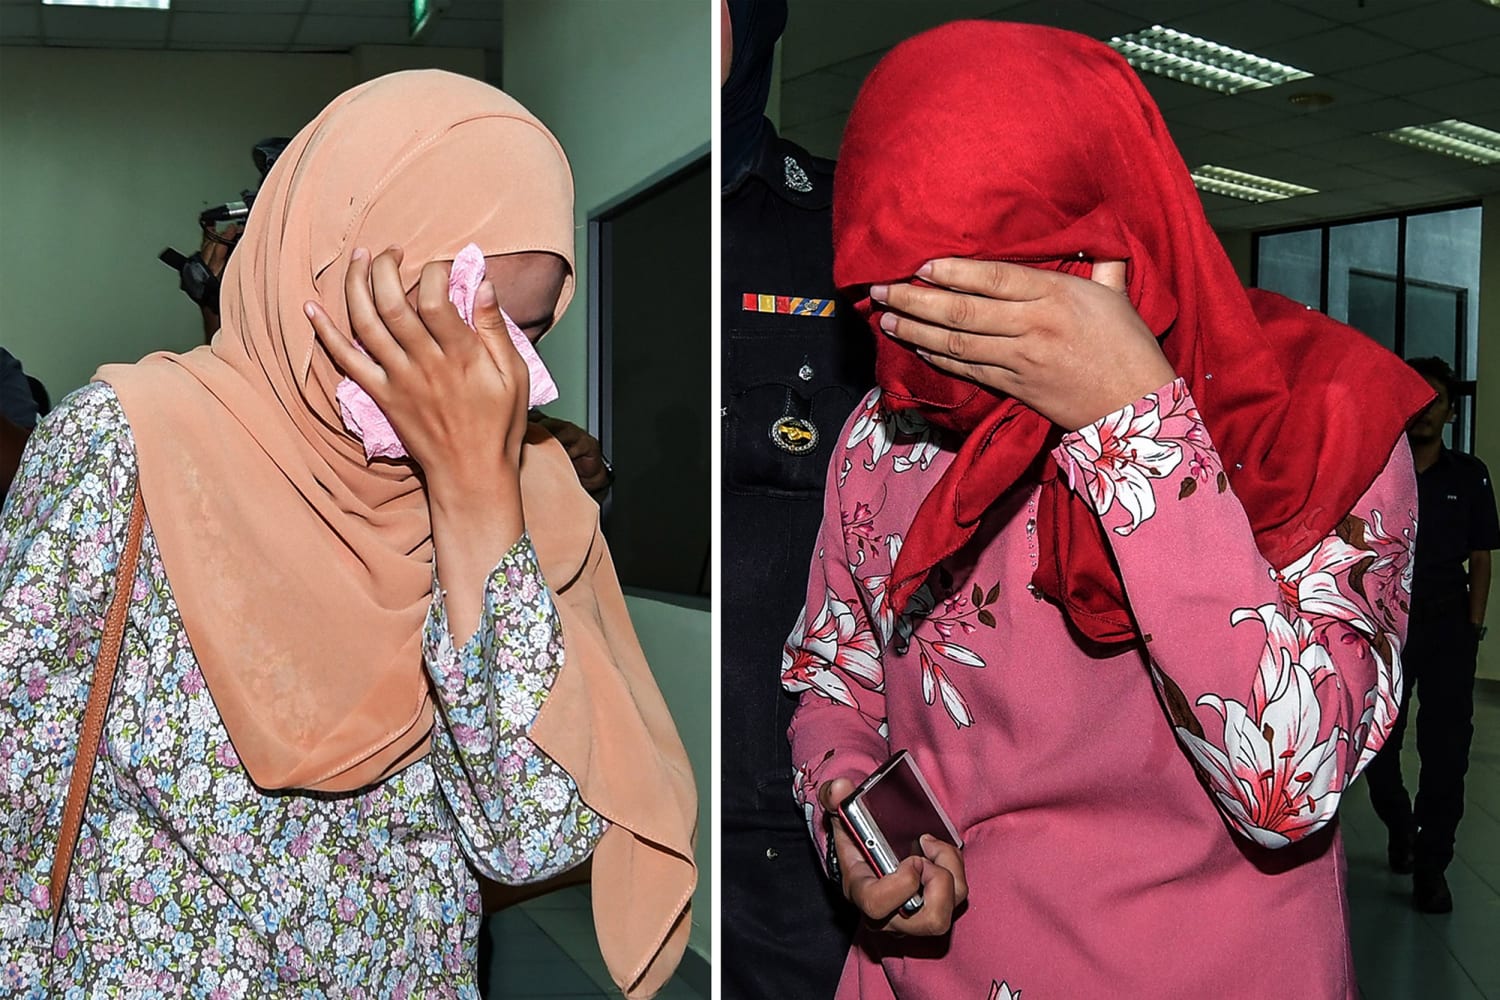 Malaysian Muslim lesbian couple caned in public punishment